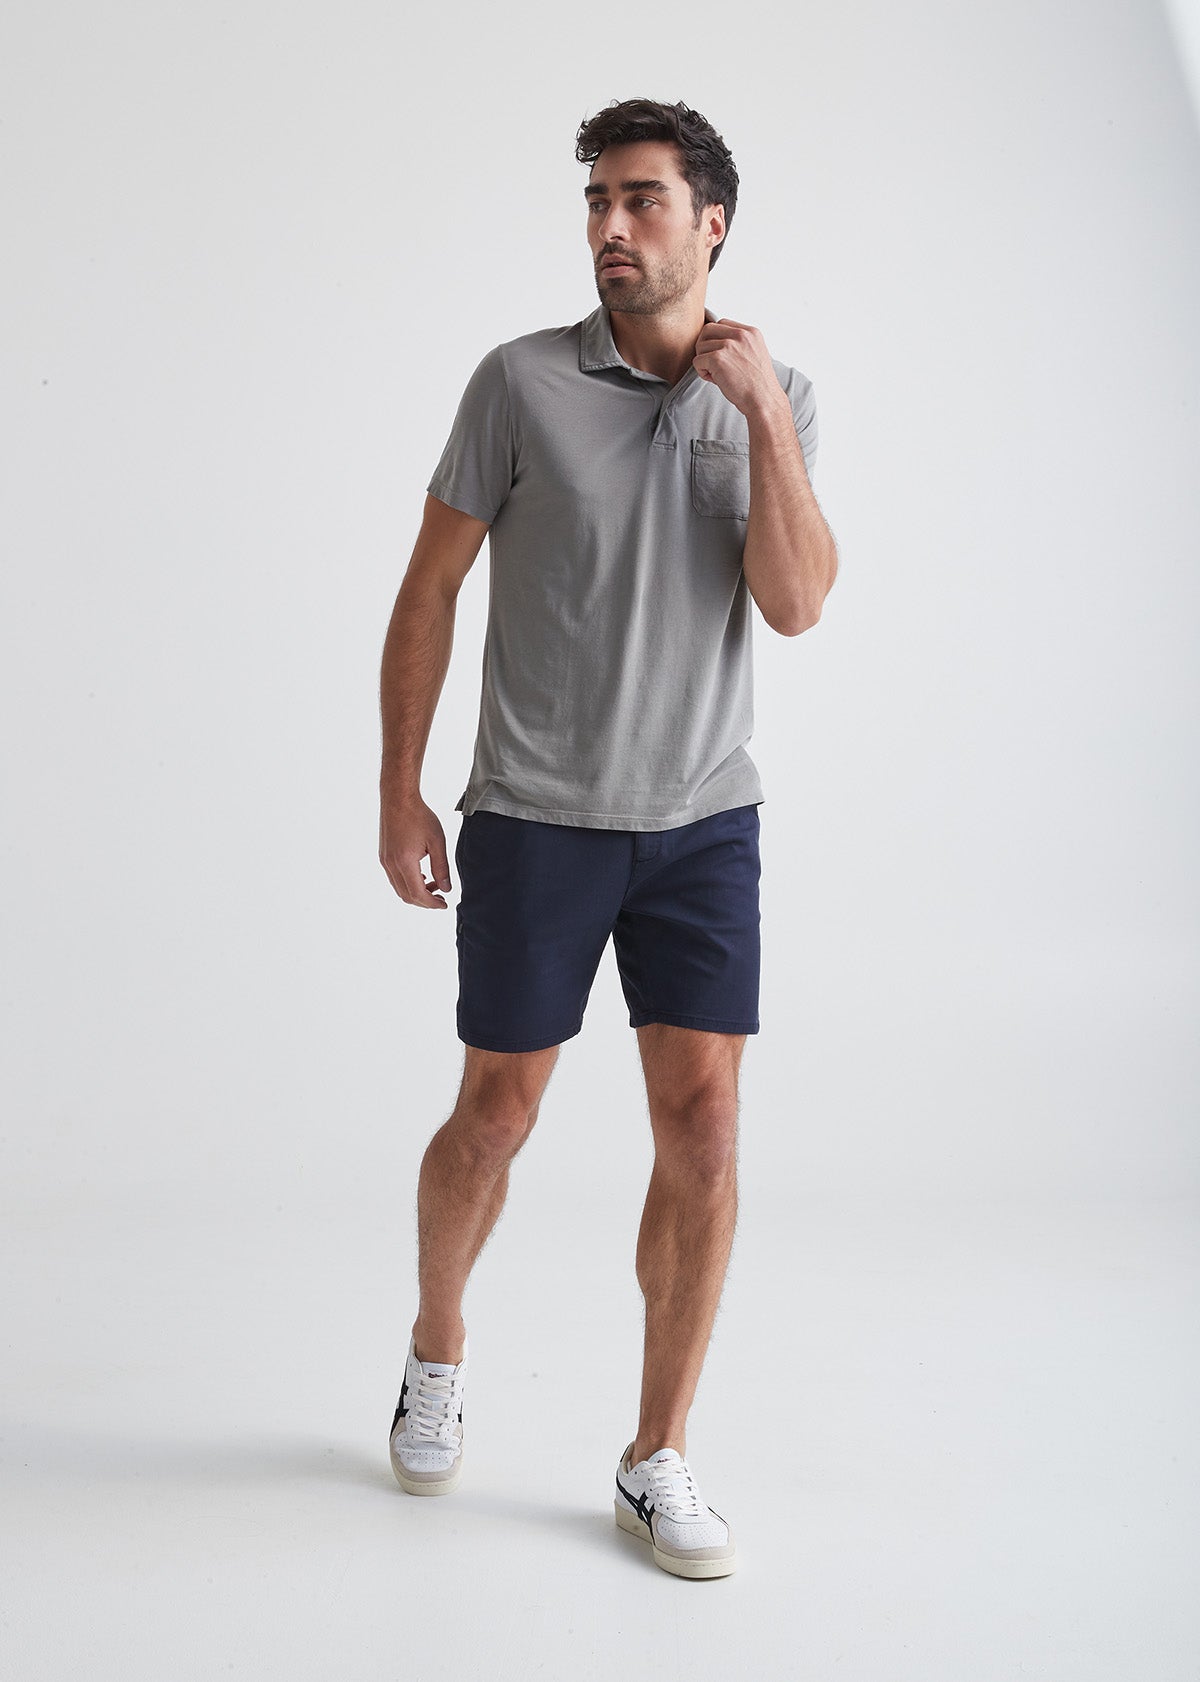 Men's Grey Slim Fit Performance Short